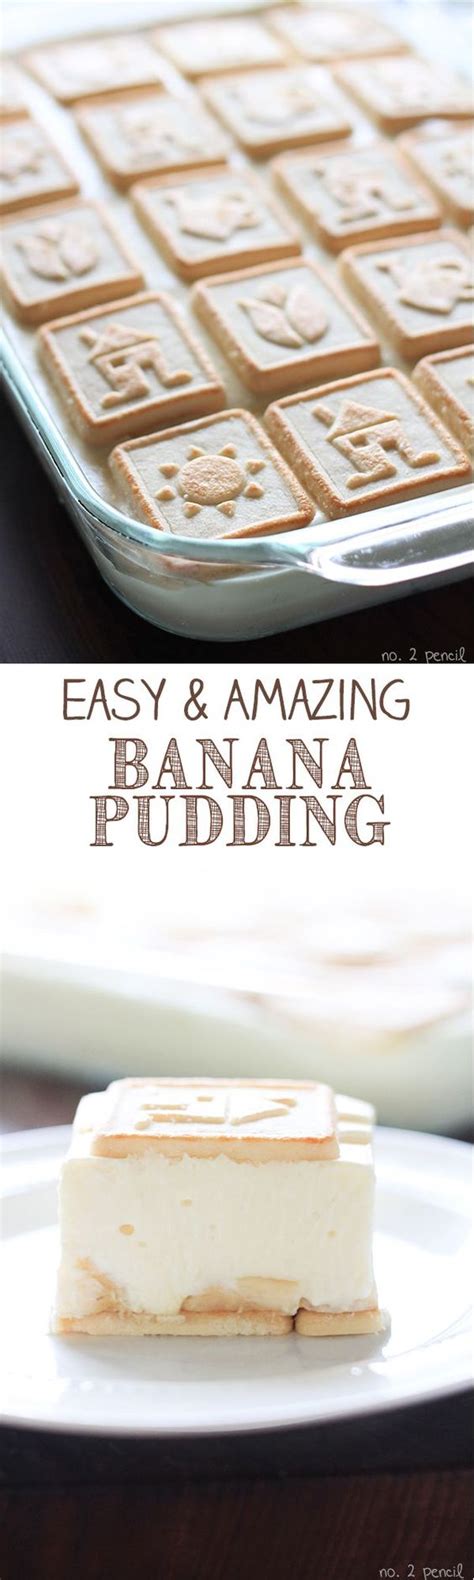 Recipe from paula deen's not you' mama's banana pudding on food network. Paula Deen Banana Pudding | Recipe | Easy banana pudding ...